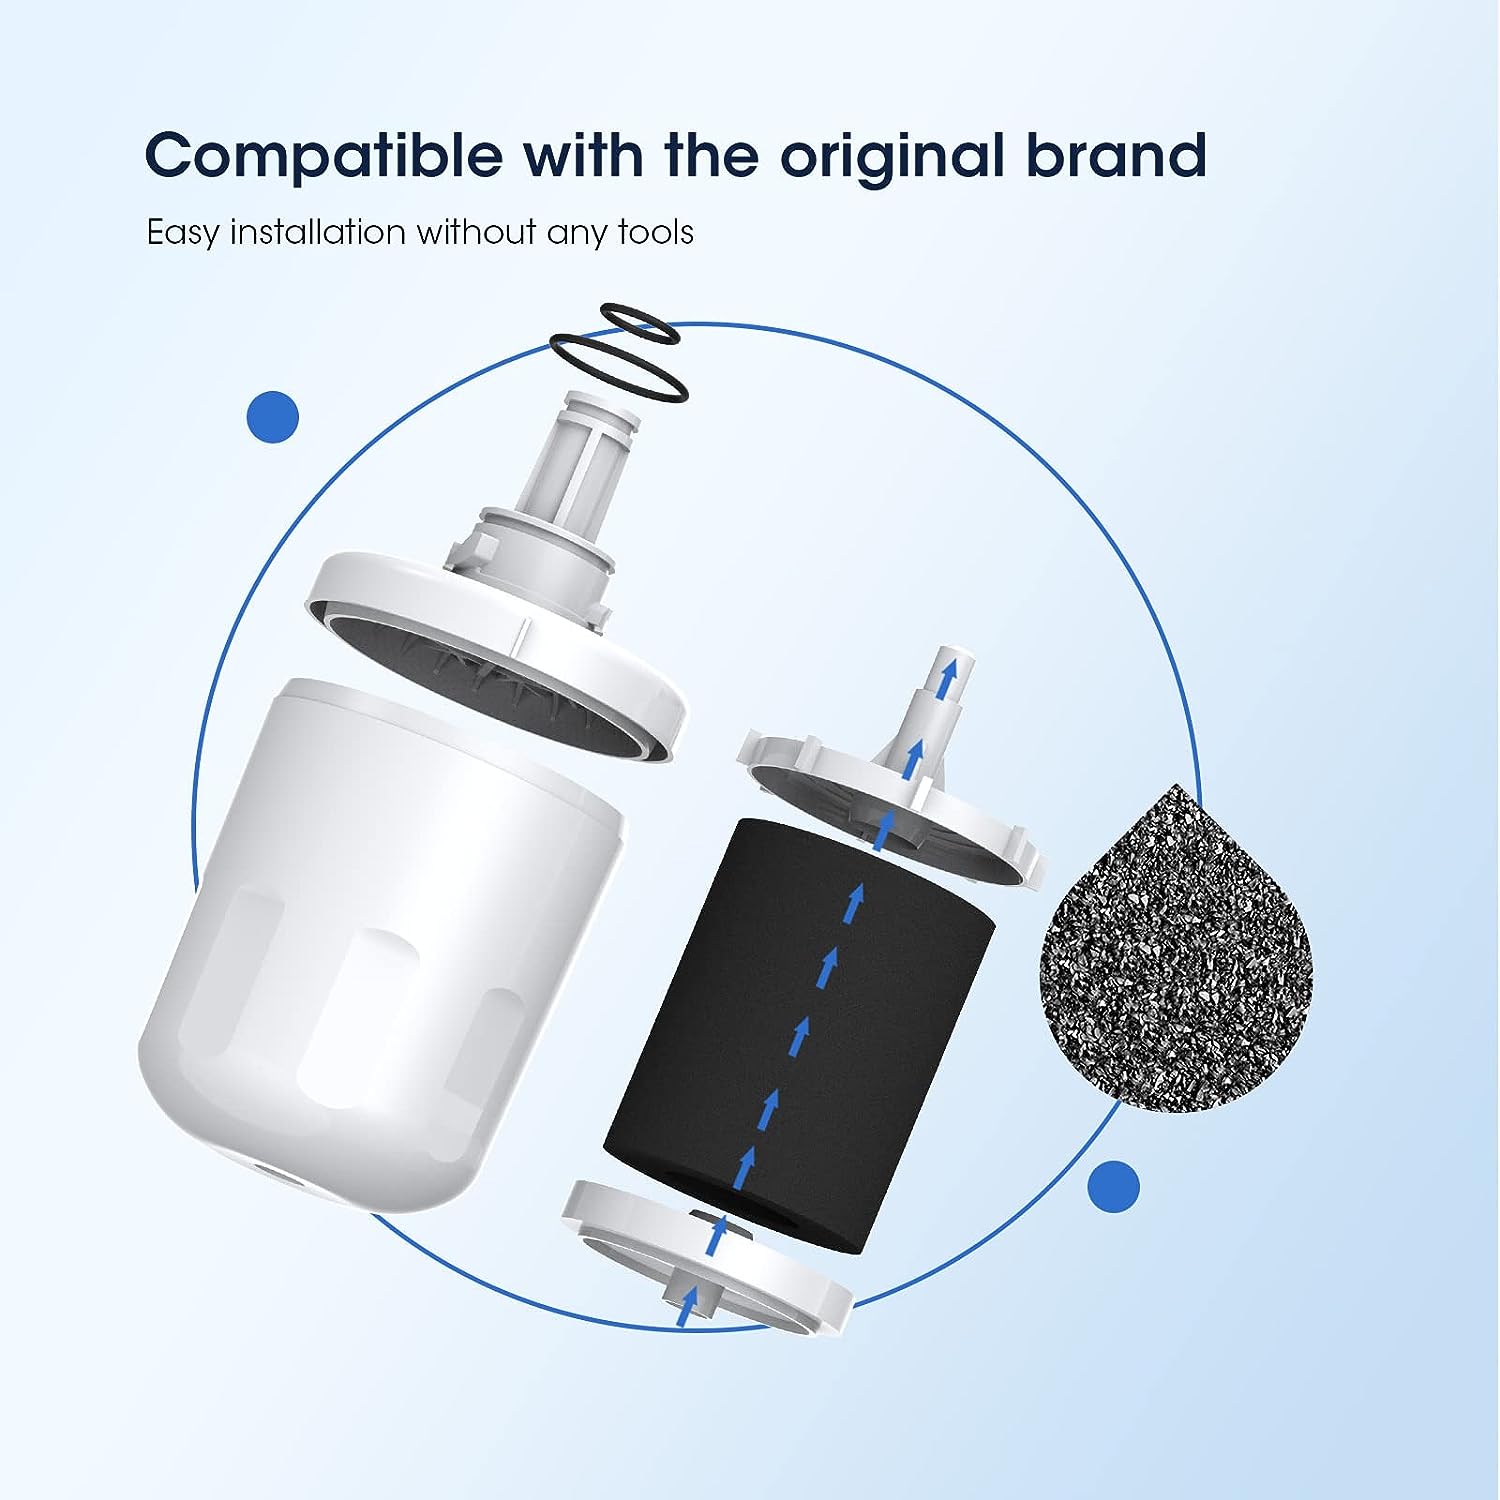 ReplacementBrand Samsung Aqua-Pure Plus DA29-00020B Comparable